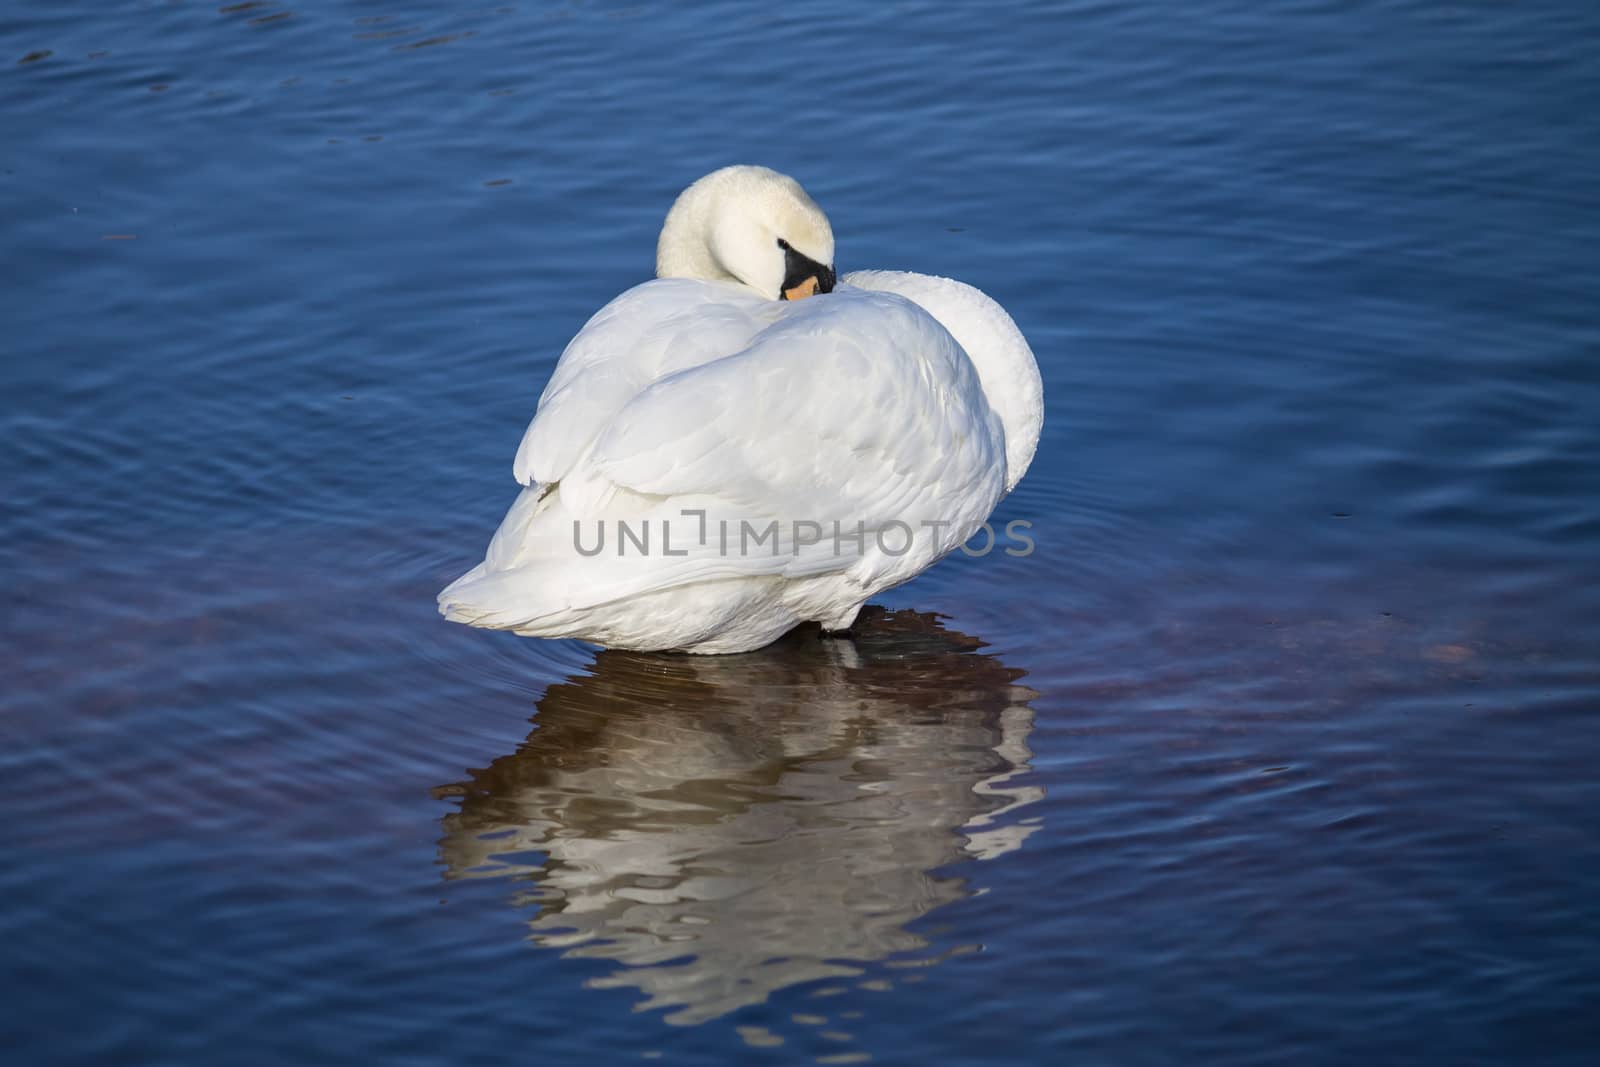 White swan standing on an underwater rock